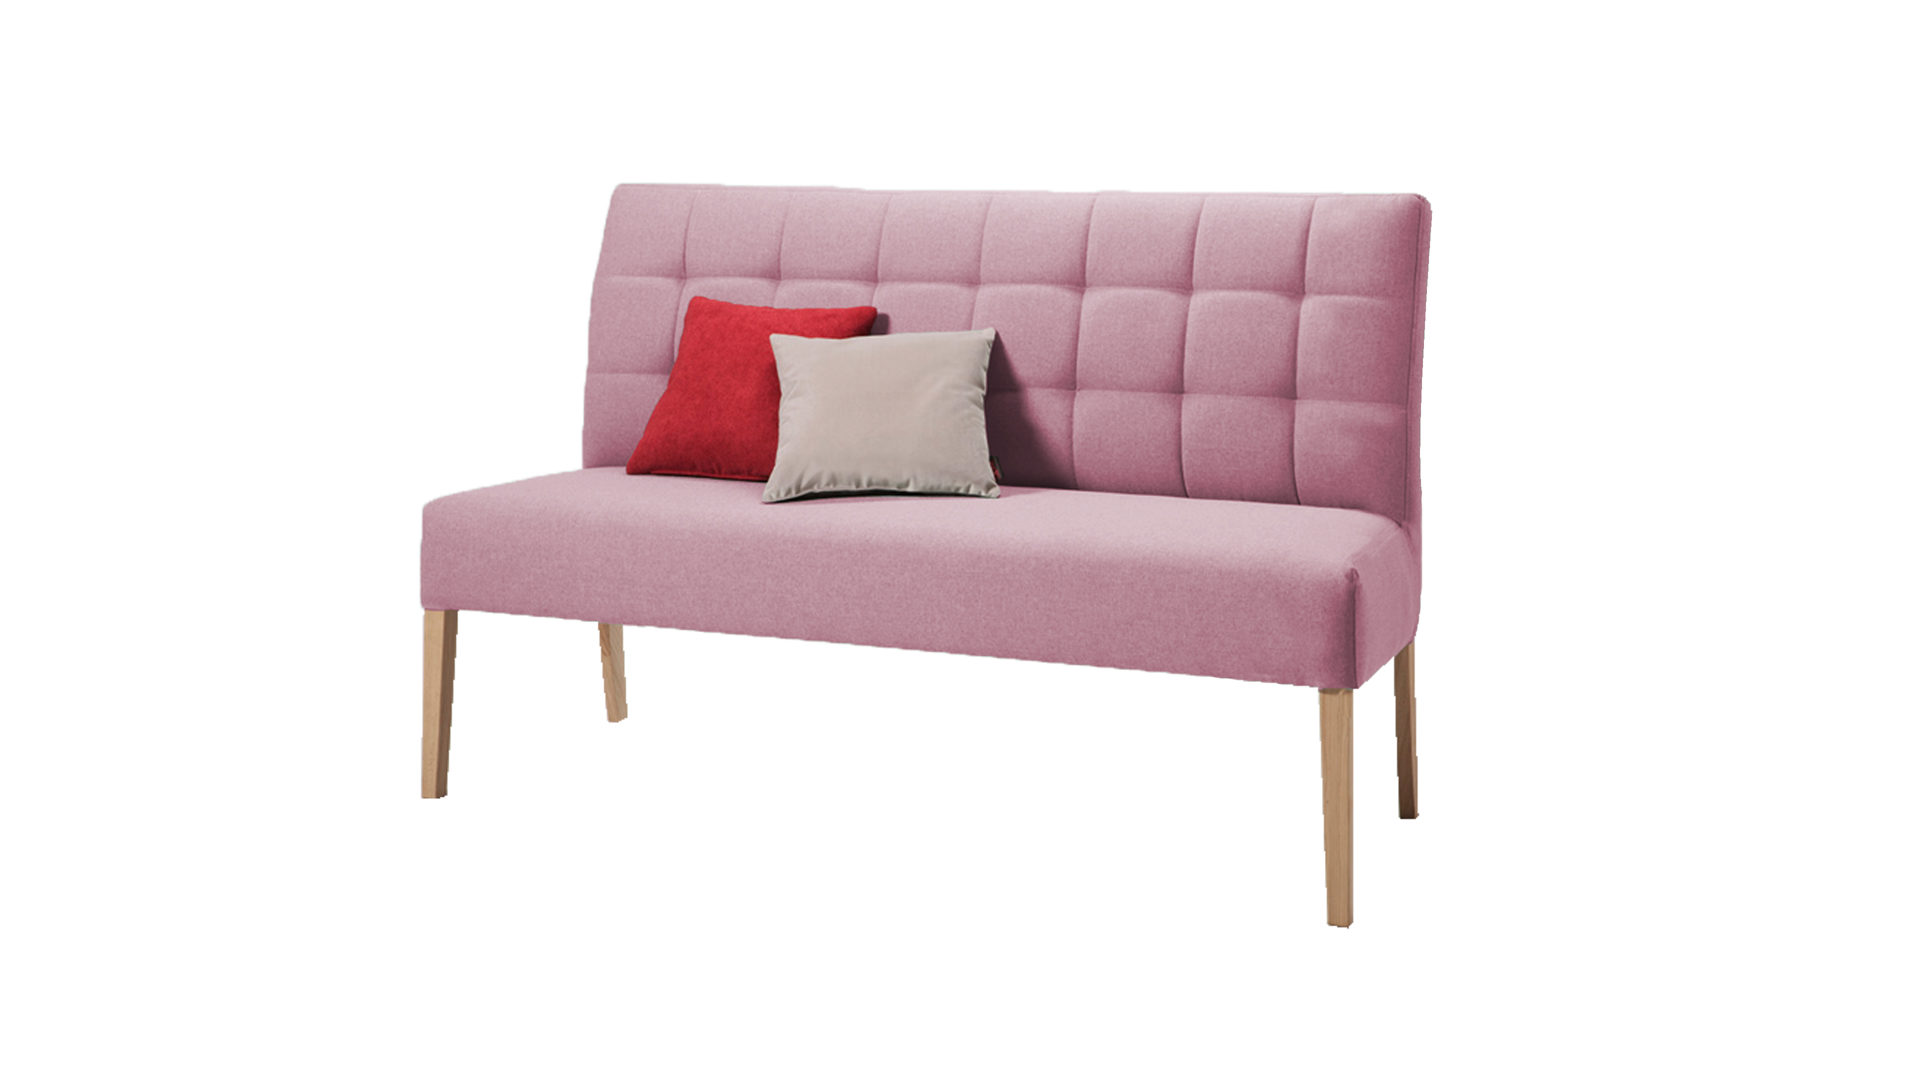 Polsterbank KAWOO aus Stoff in Pink KAWOO Polsterbank Capi bzw. Sitzmöbel magnolienfarbener Webstoff Pitch & Eiche – Länge ca. 150 cm